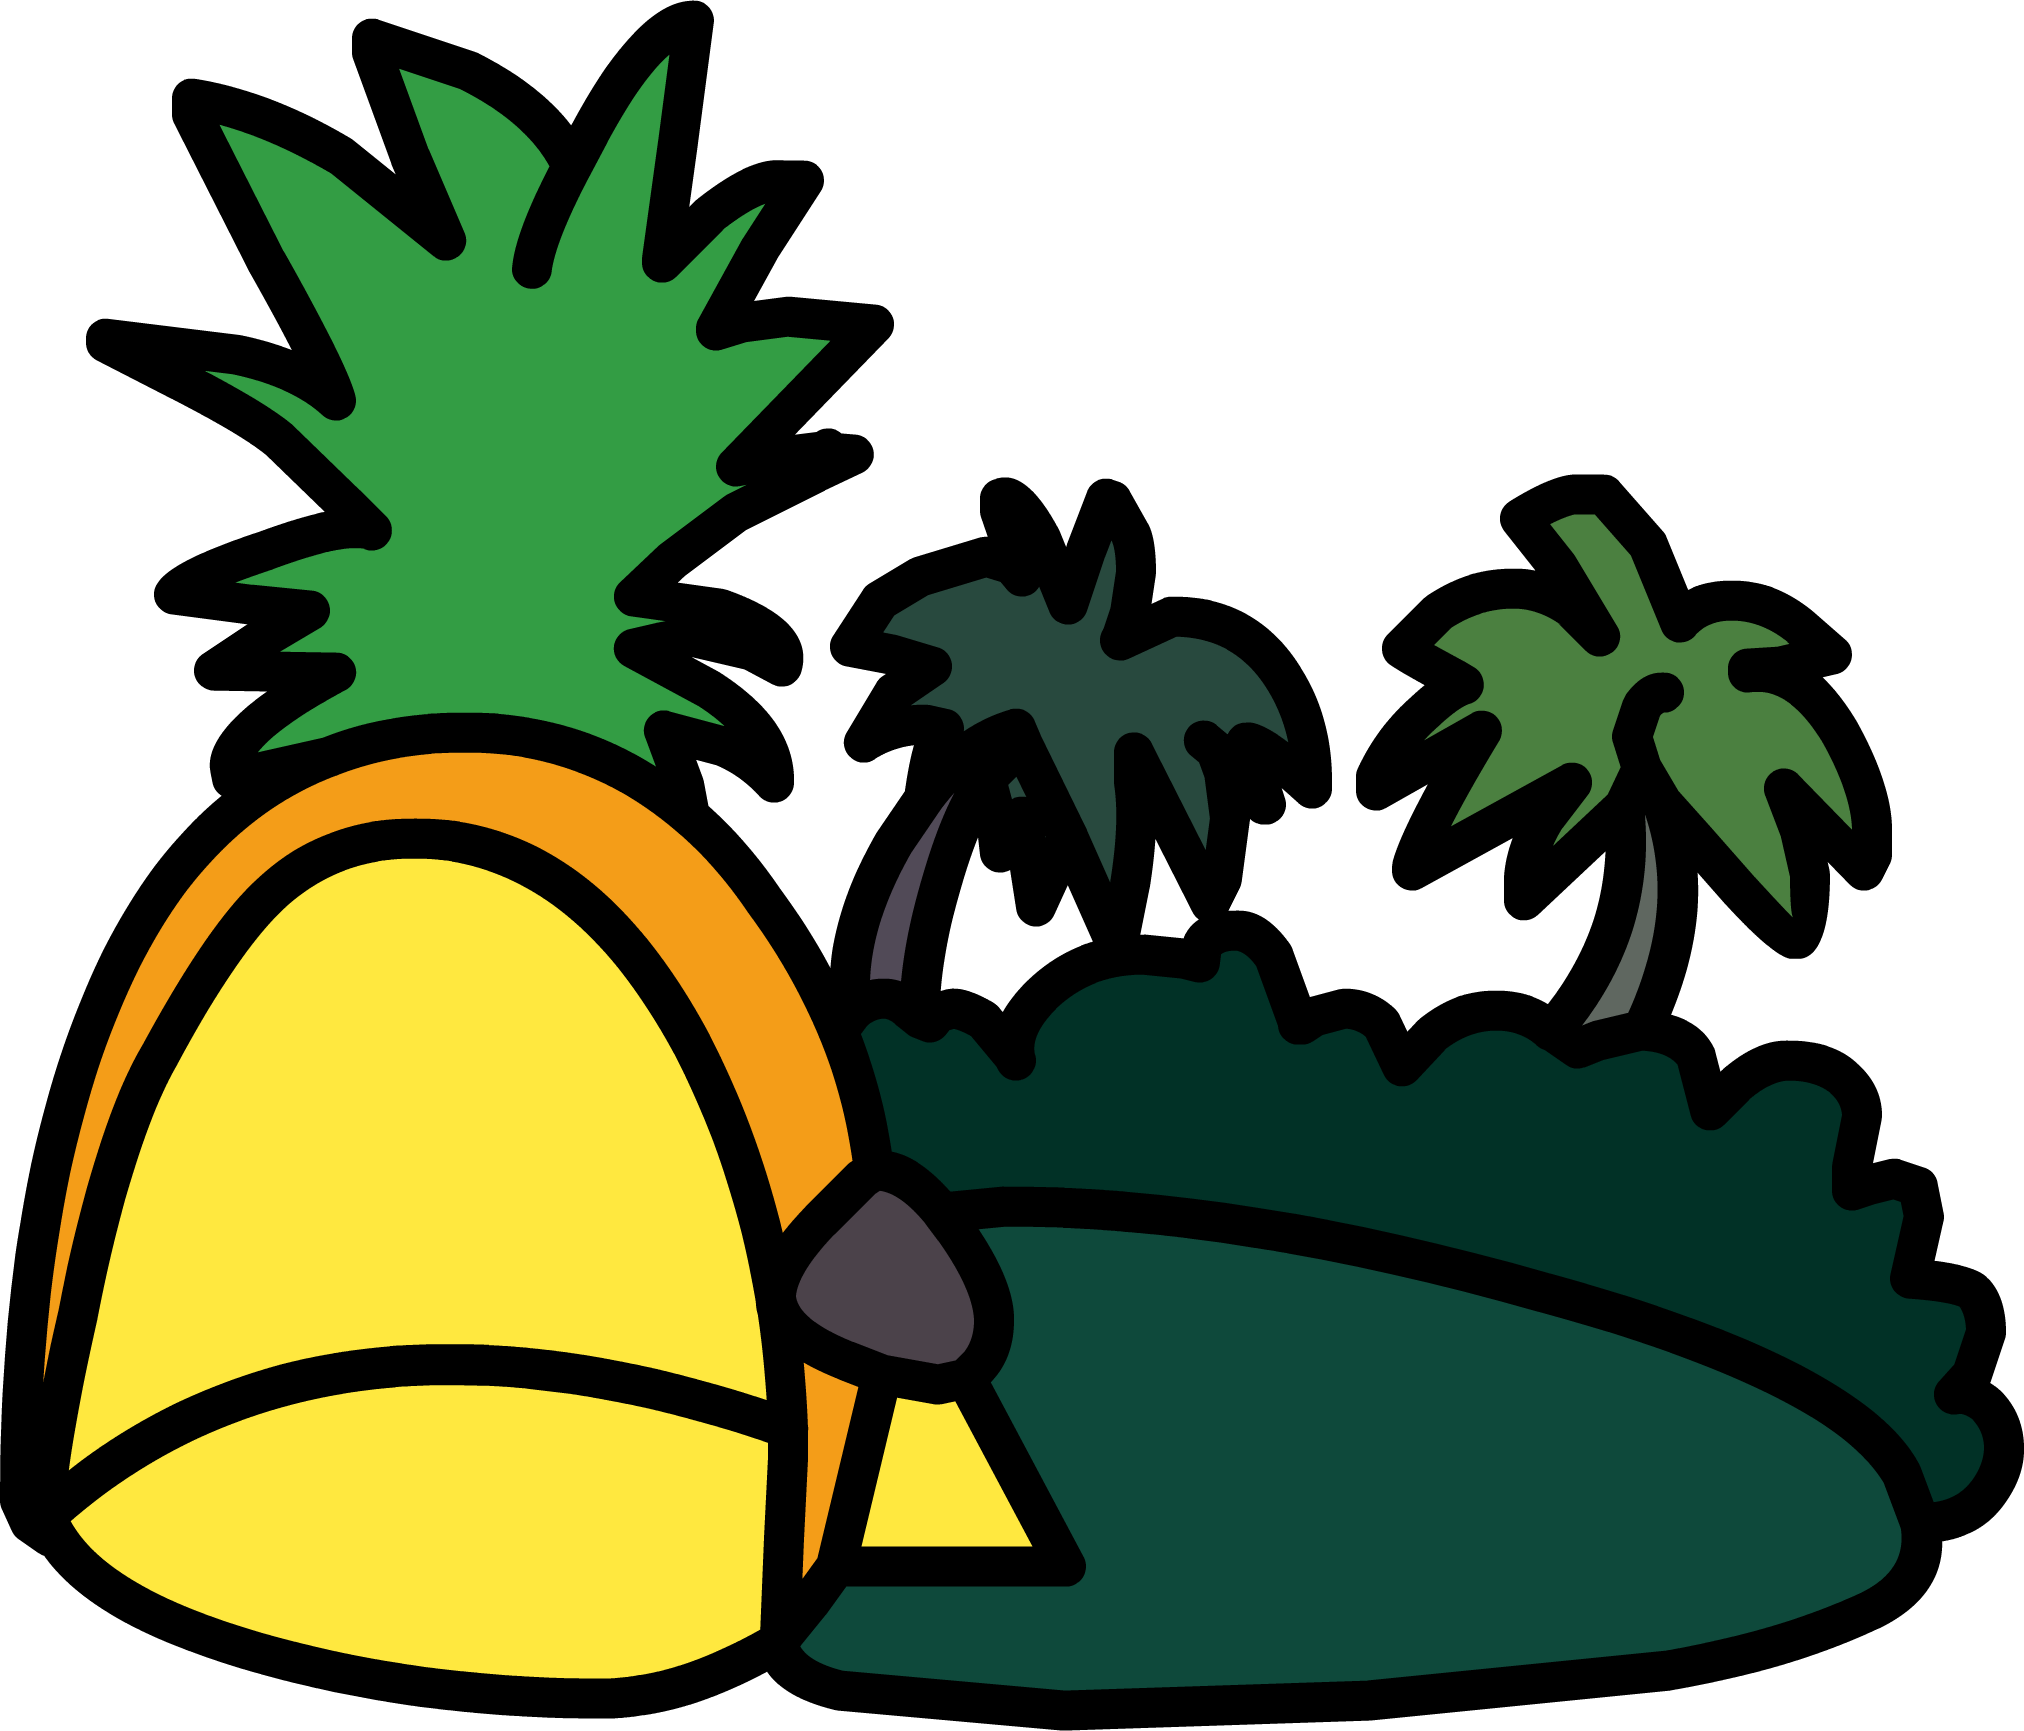 Pineapple Igloo - Pineapple Igloo (2024x1731)